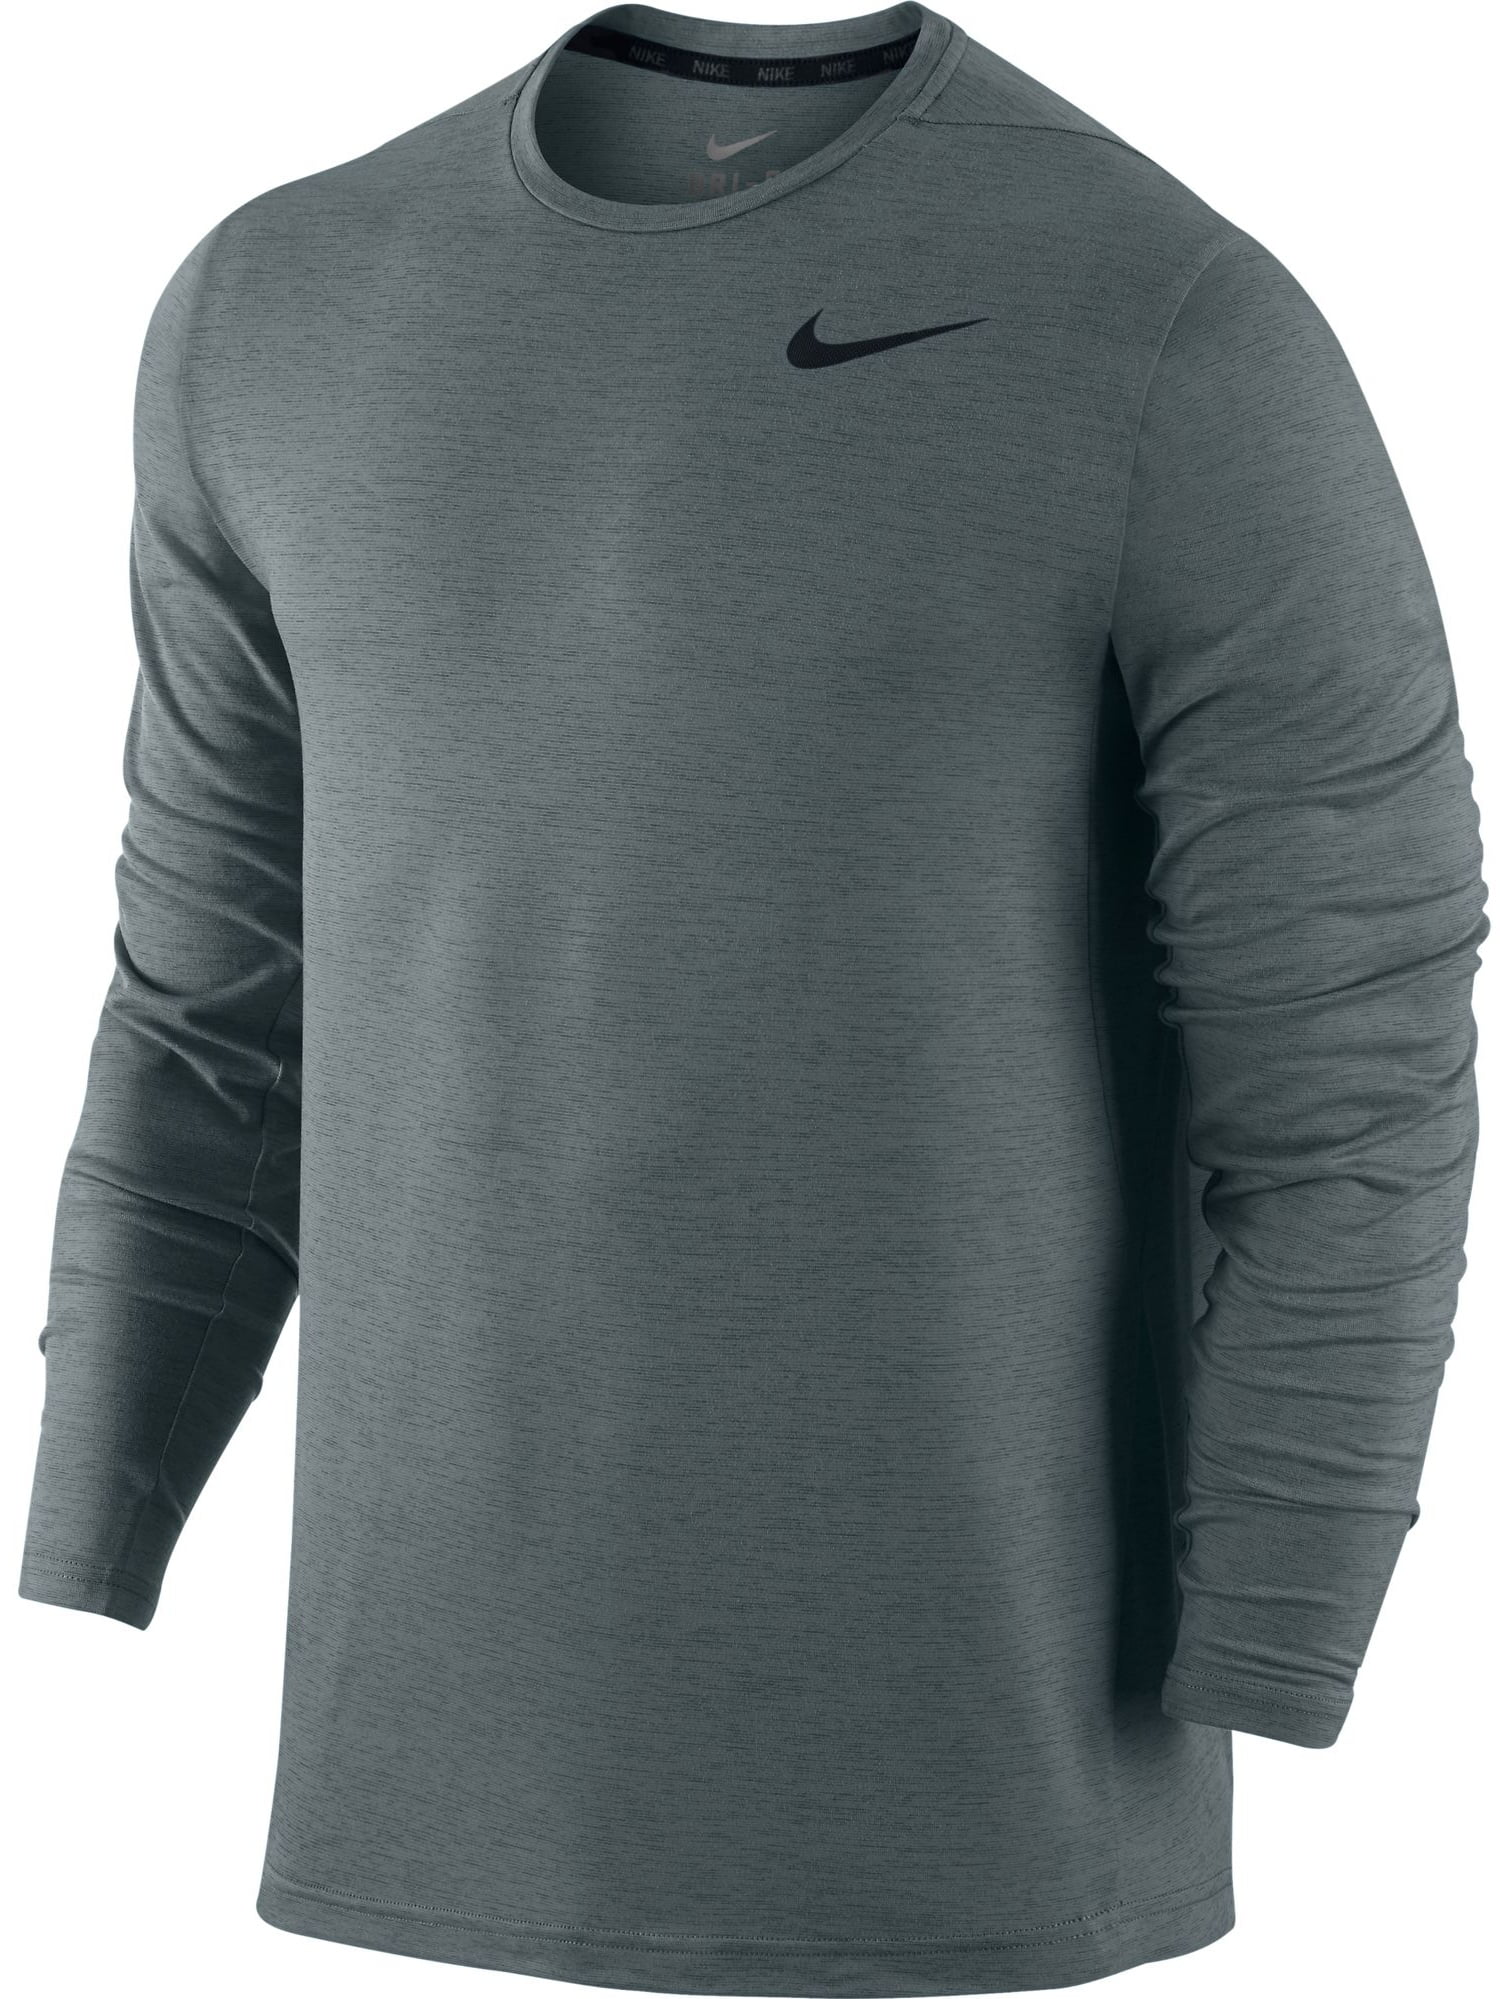 Nike Dri-Fit Training Longsleeve Men's T-Shirt Gym Grey/Black 742232 ...